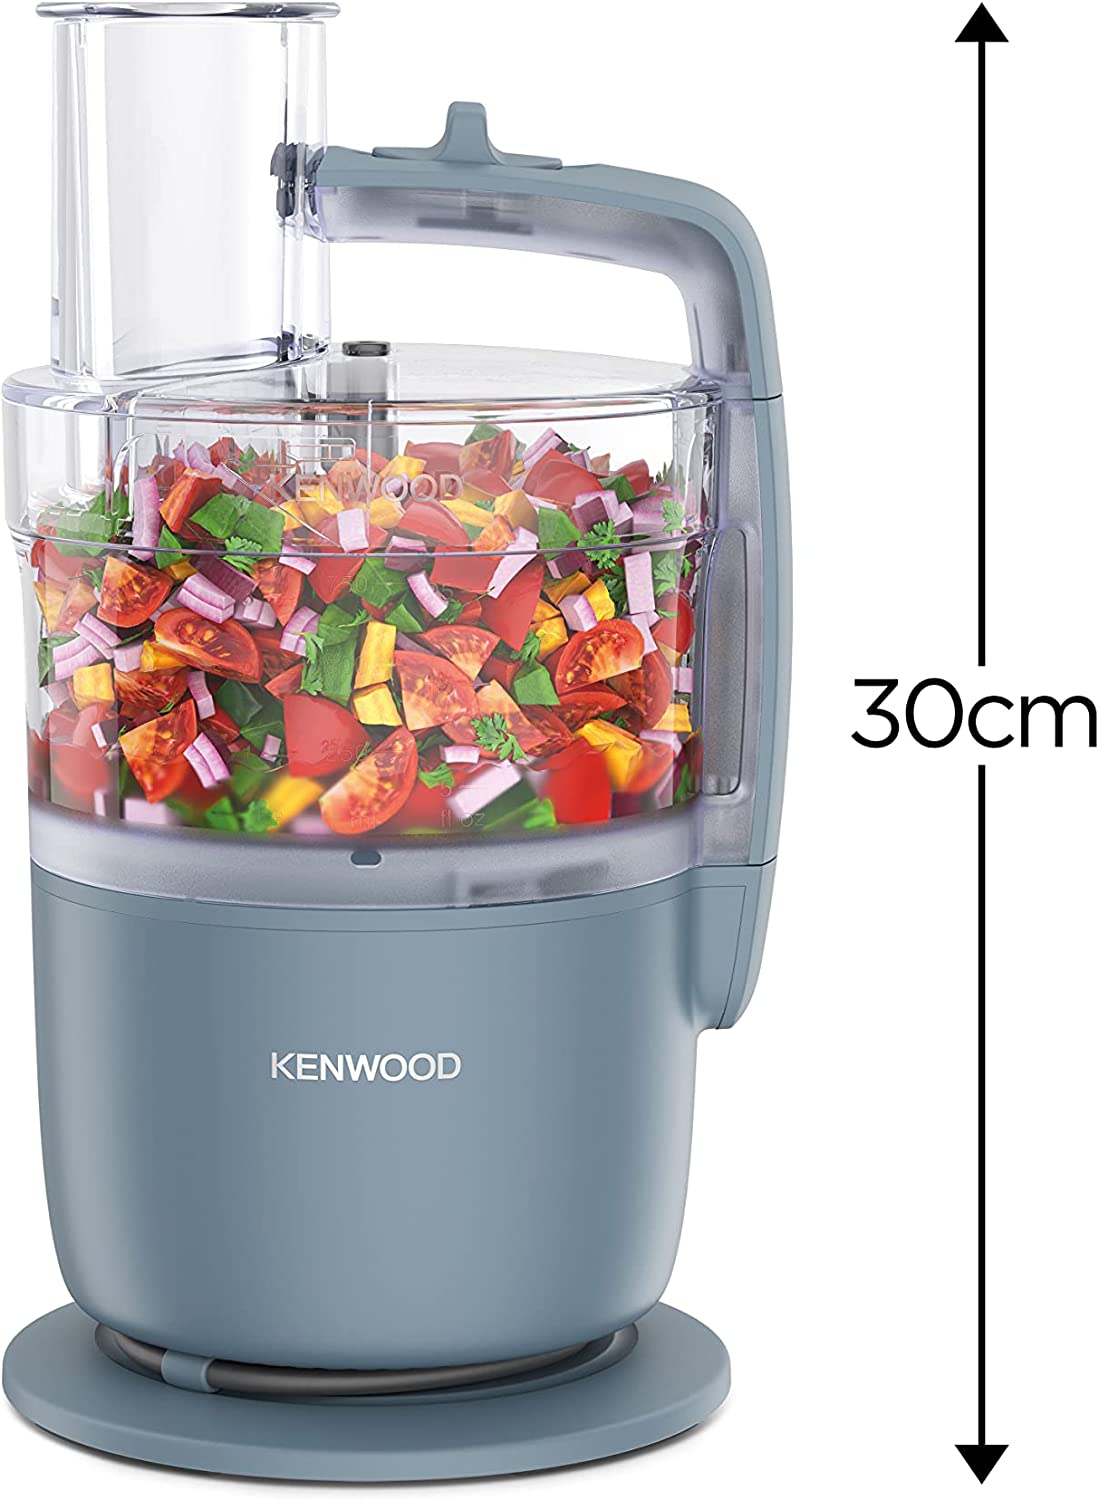 Kenwood Robot da cucina Kenwood MultiPro Go molto utile e pratico per vegetariani e vegani FDP22.130GY